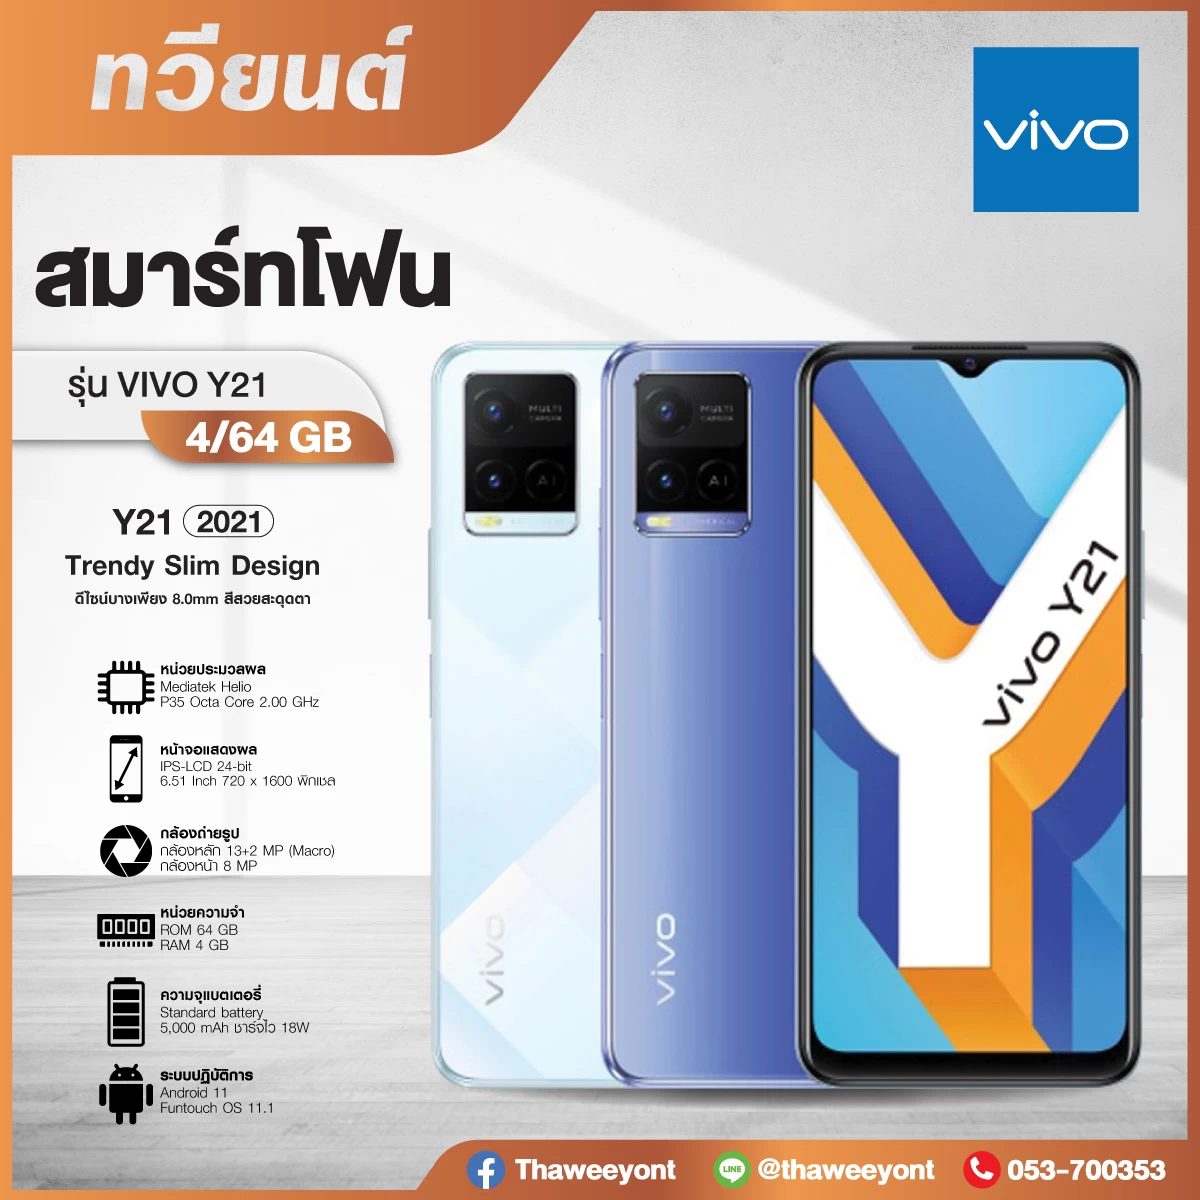 Vivo Y21 (2021) (4 64GB) ขนาด 6.51 นิ้ว แบตเตอรี่ 5000 mAh สี Diamond Glow, Metallic Blue ประกันศูนย์